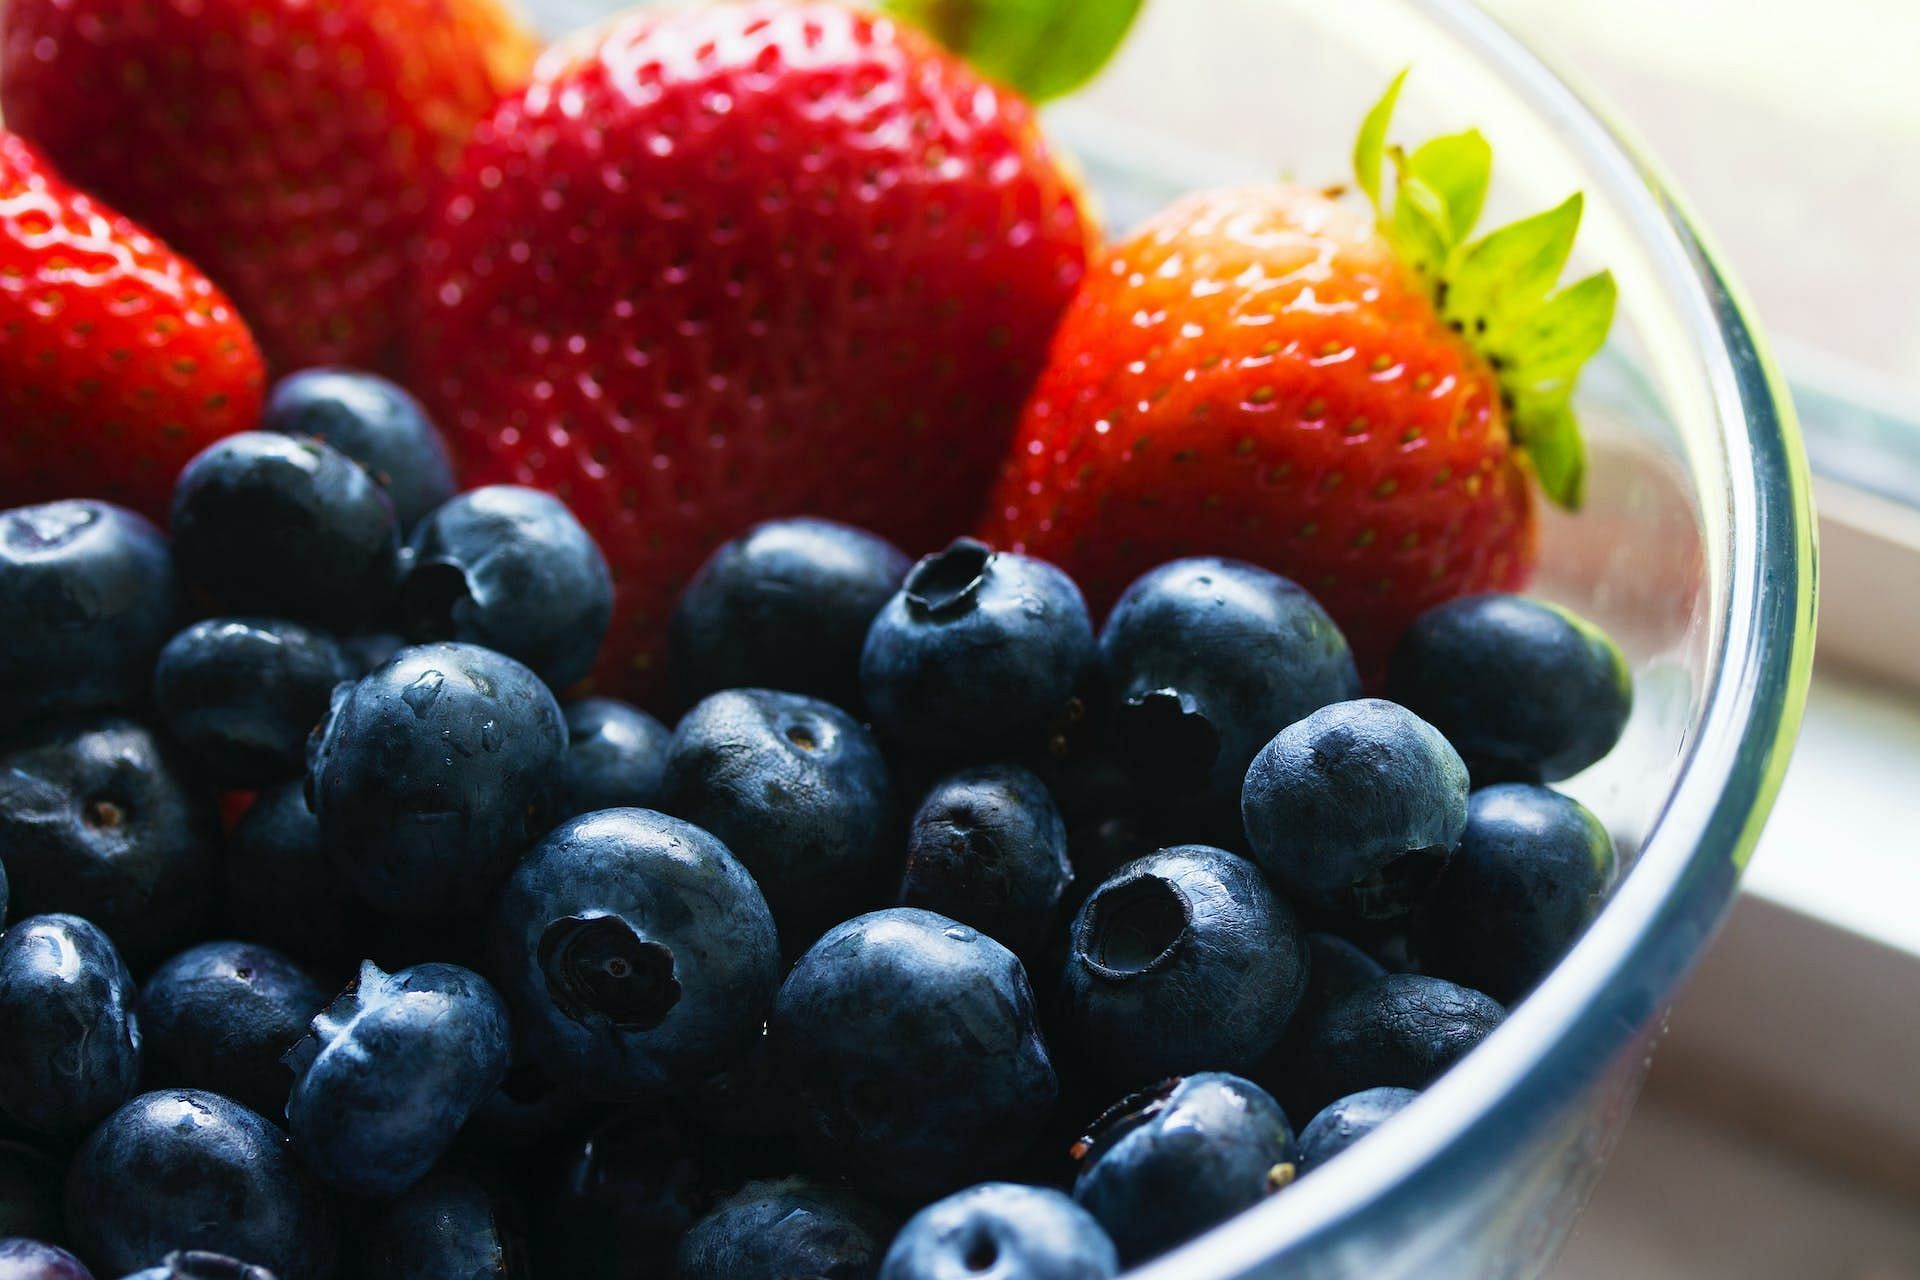 Berries reduce depression. (Image via Pexels/Angele J)